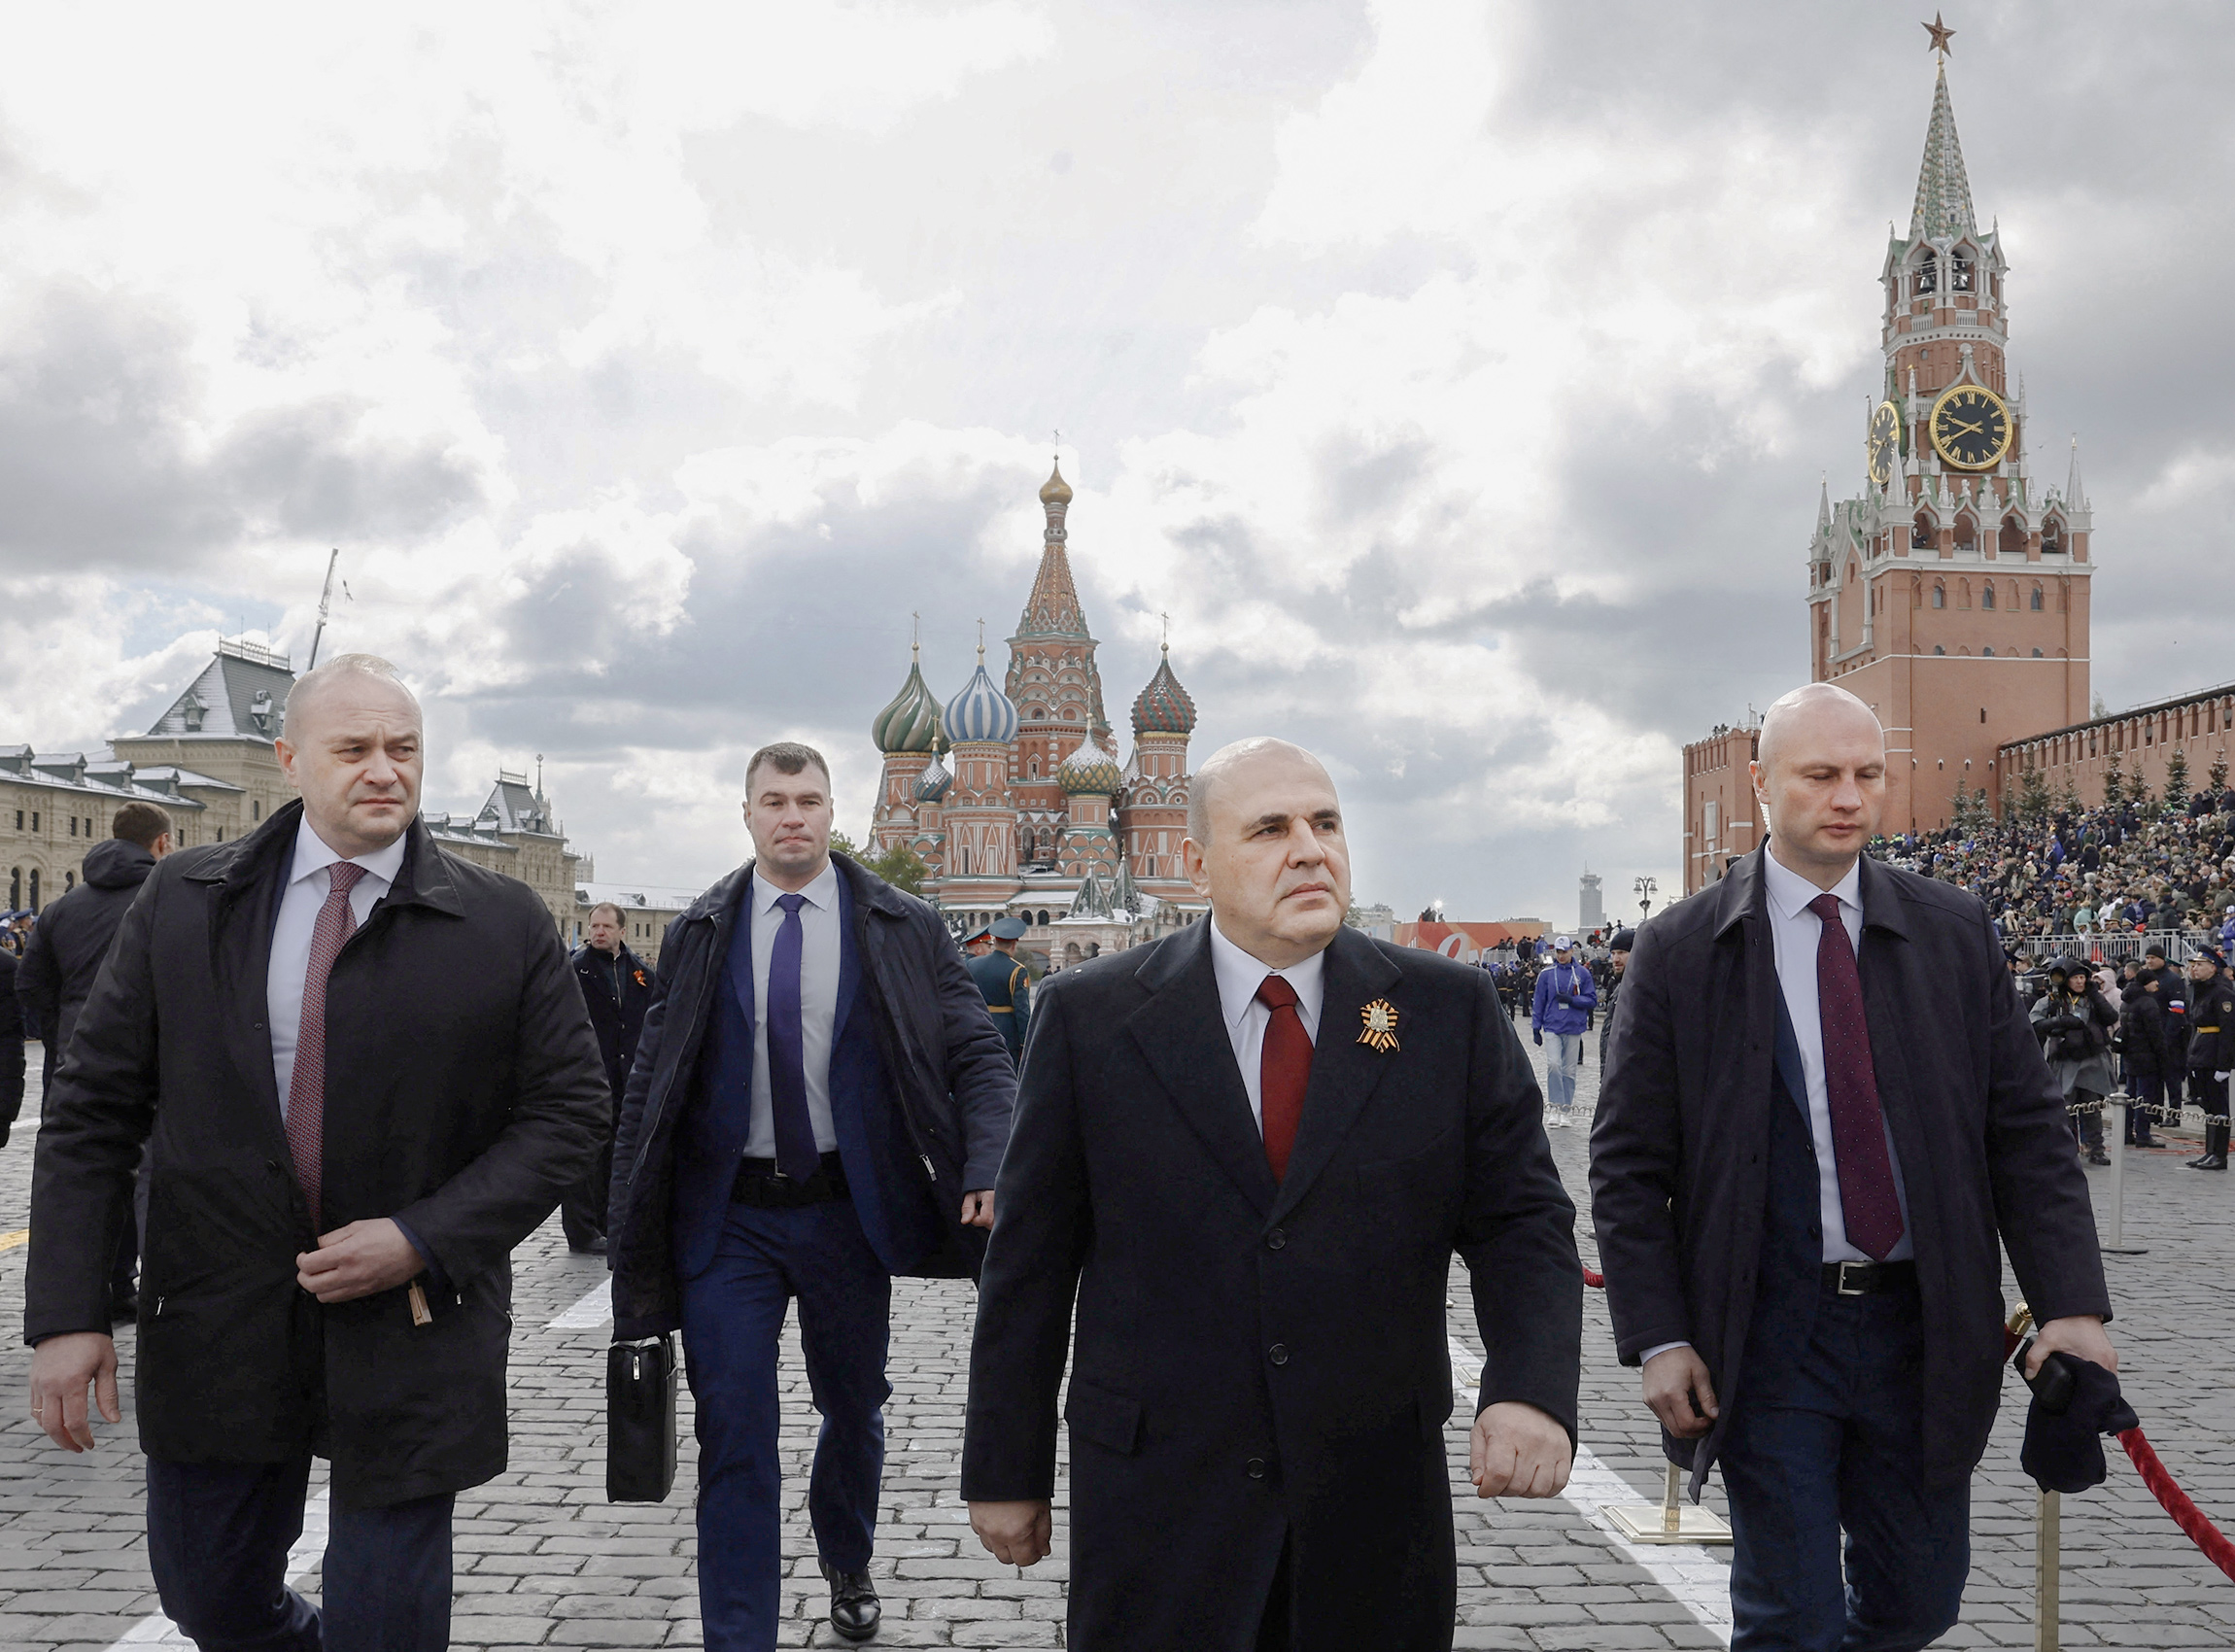 Михаил Мишустин, исполняющий обязанности премьер-министра с момента инаугурации Владимира Путина, также посетил парад.